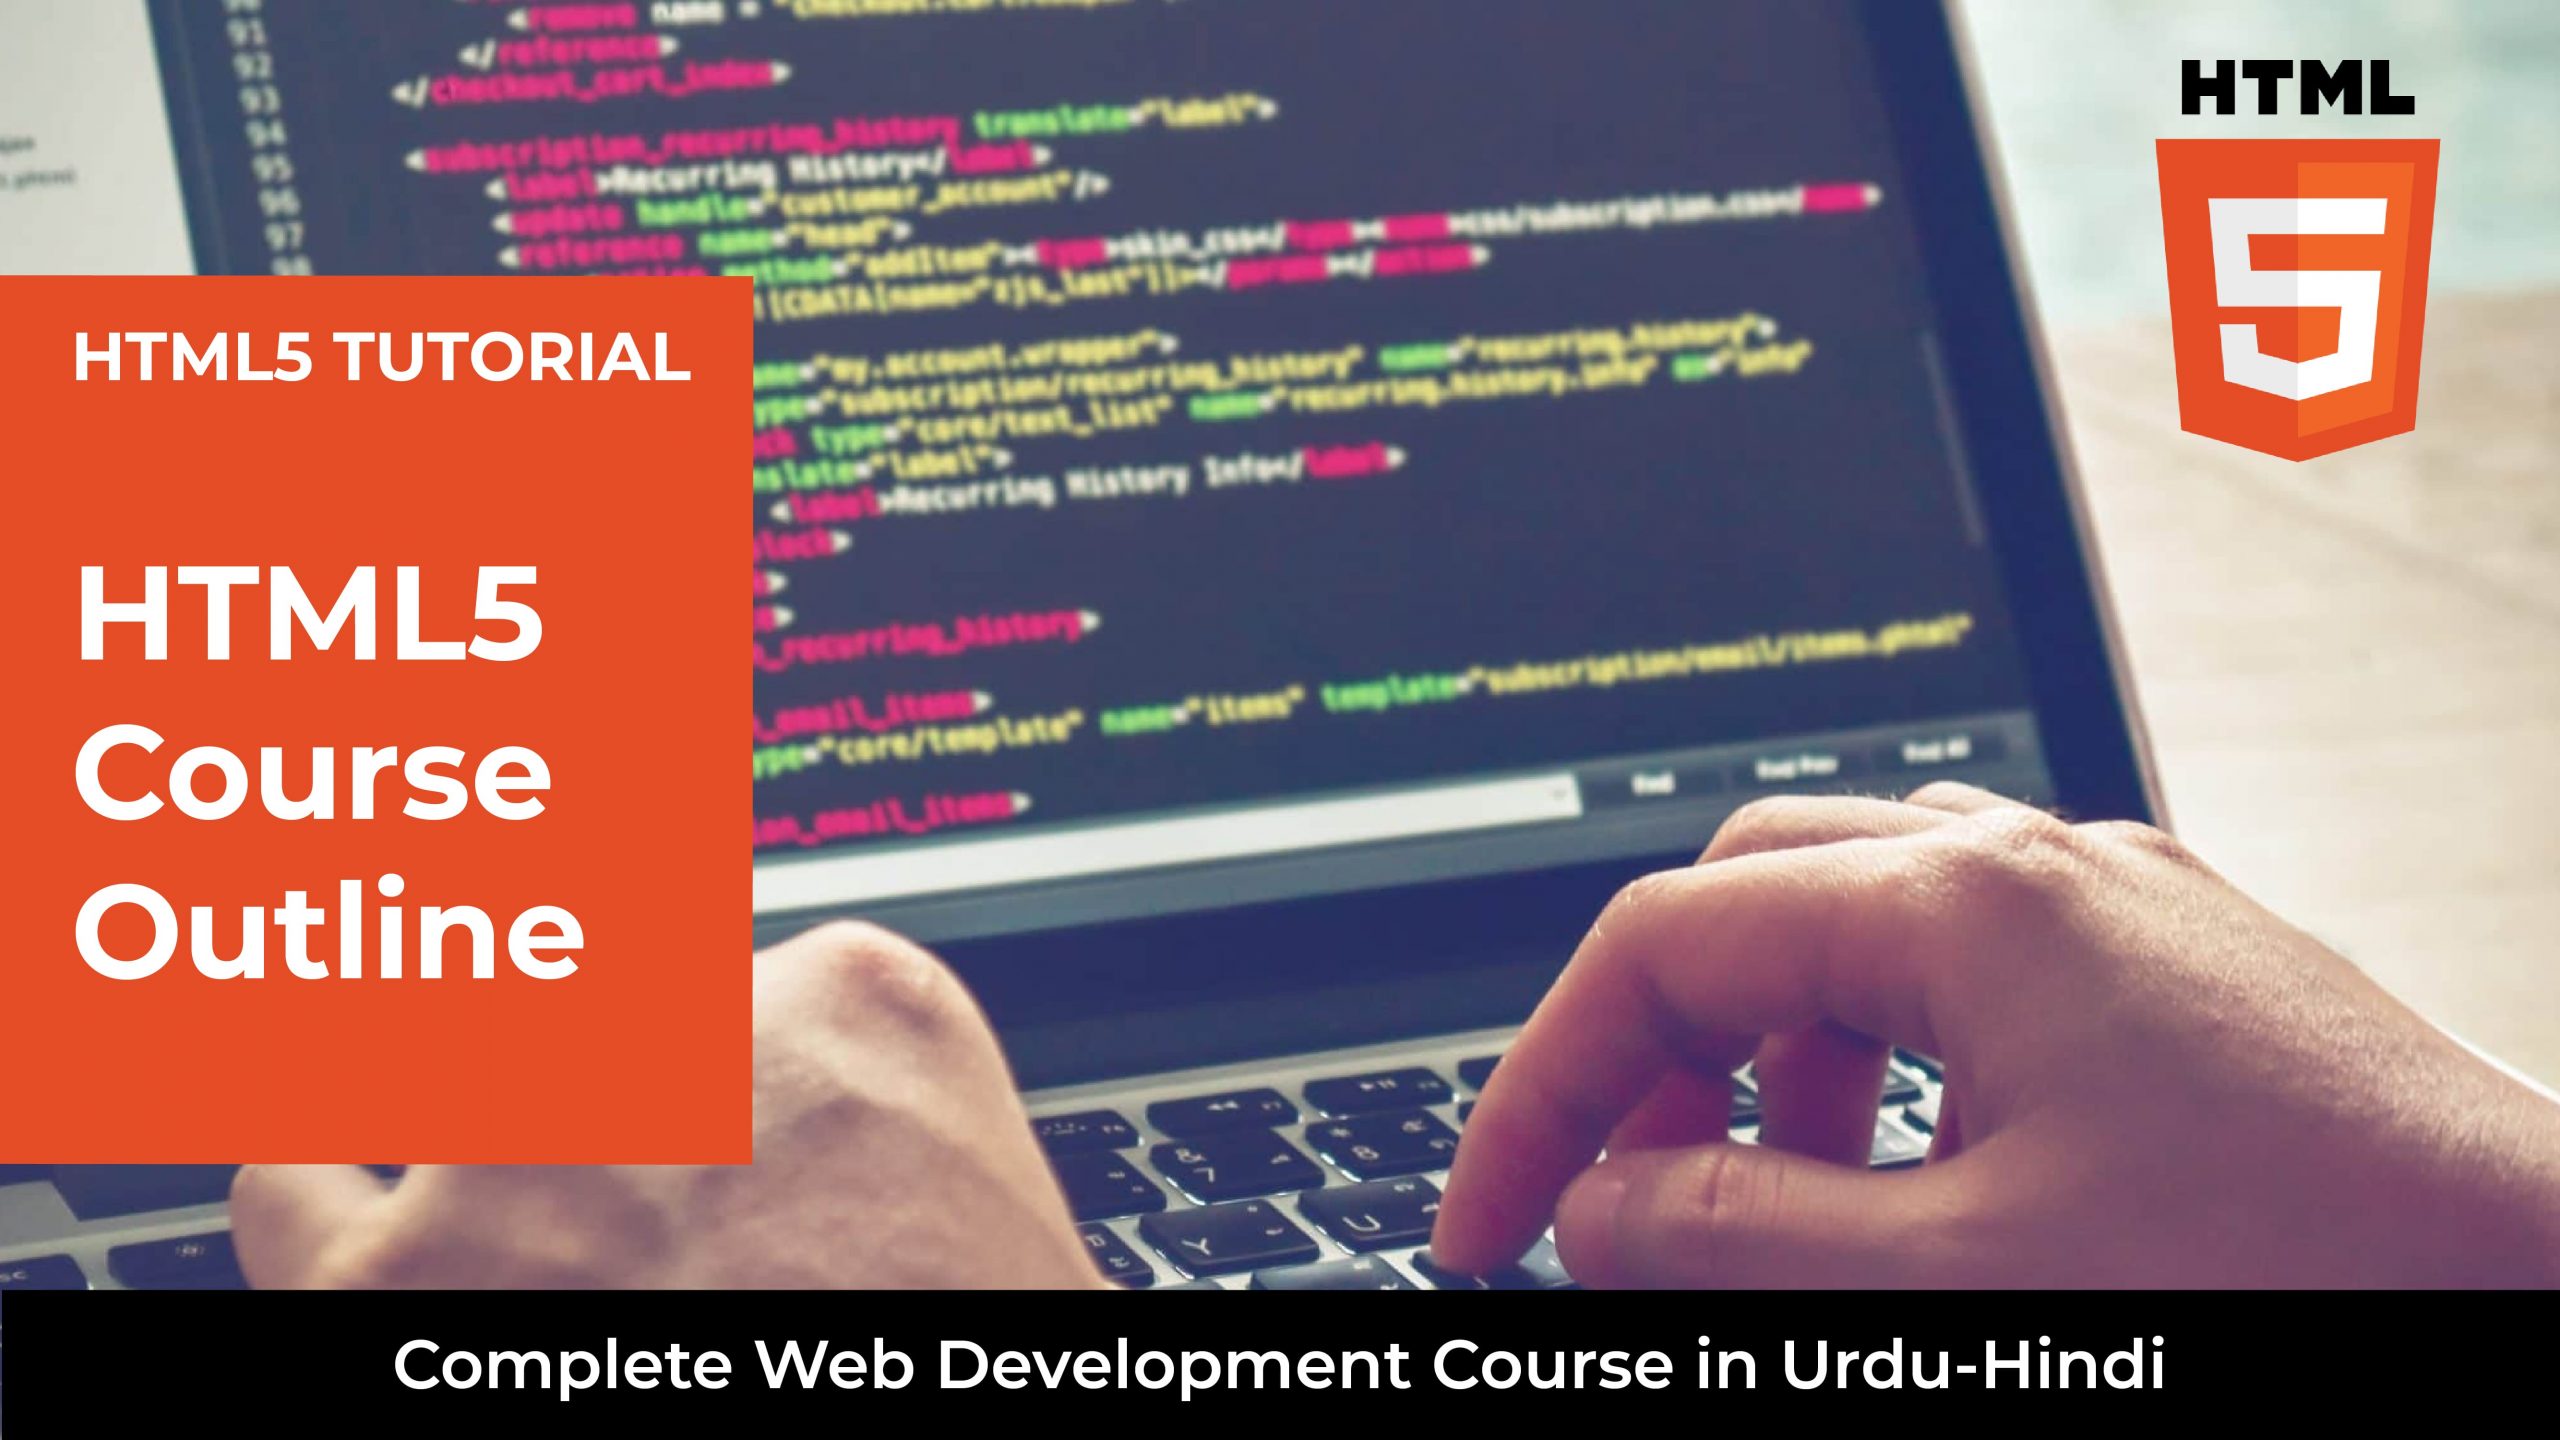 HTML5 Tutorial HTML5 Course Outline - Web Development Full Course